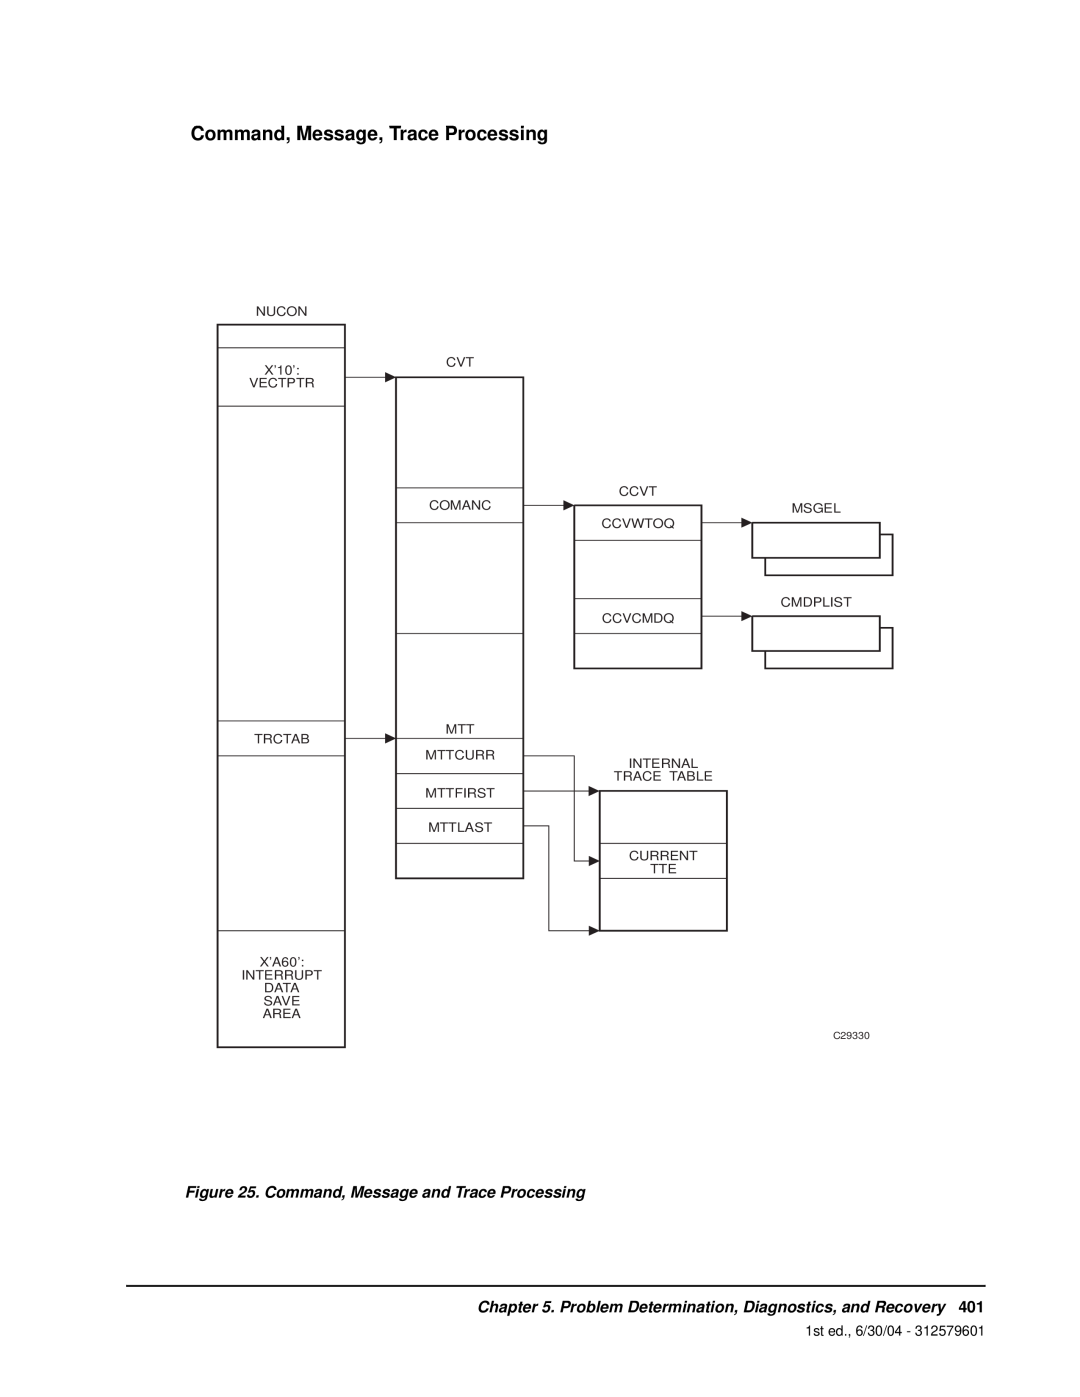 StorageTek Command, Message, Trace Processing, Command, Message and Trace Processing, 1st ed., 6/30/04, Cvt Comanc Mtt 